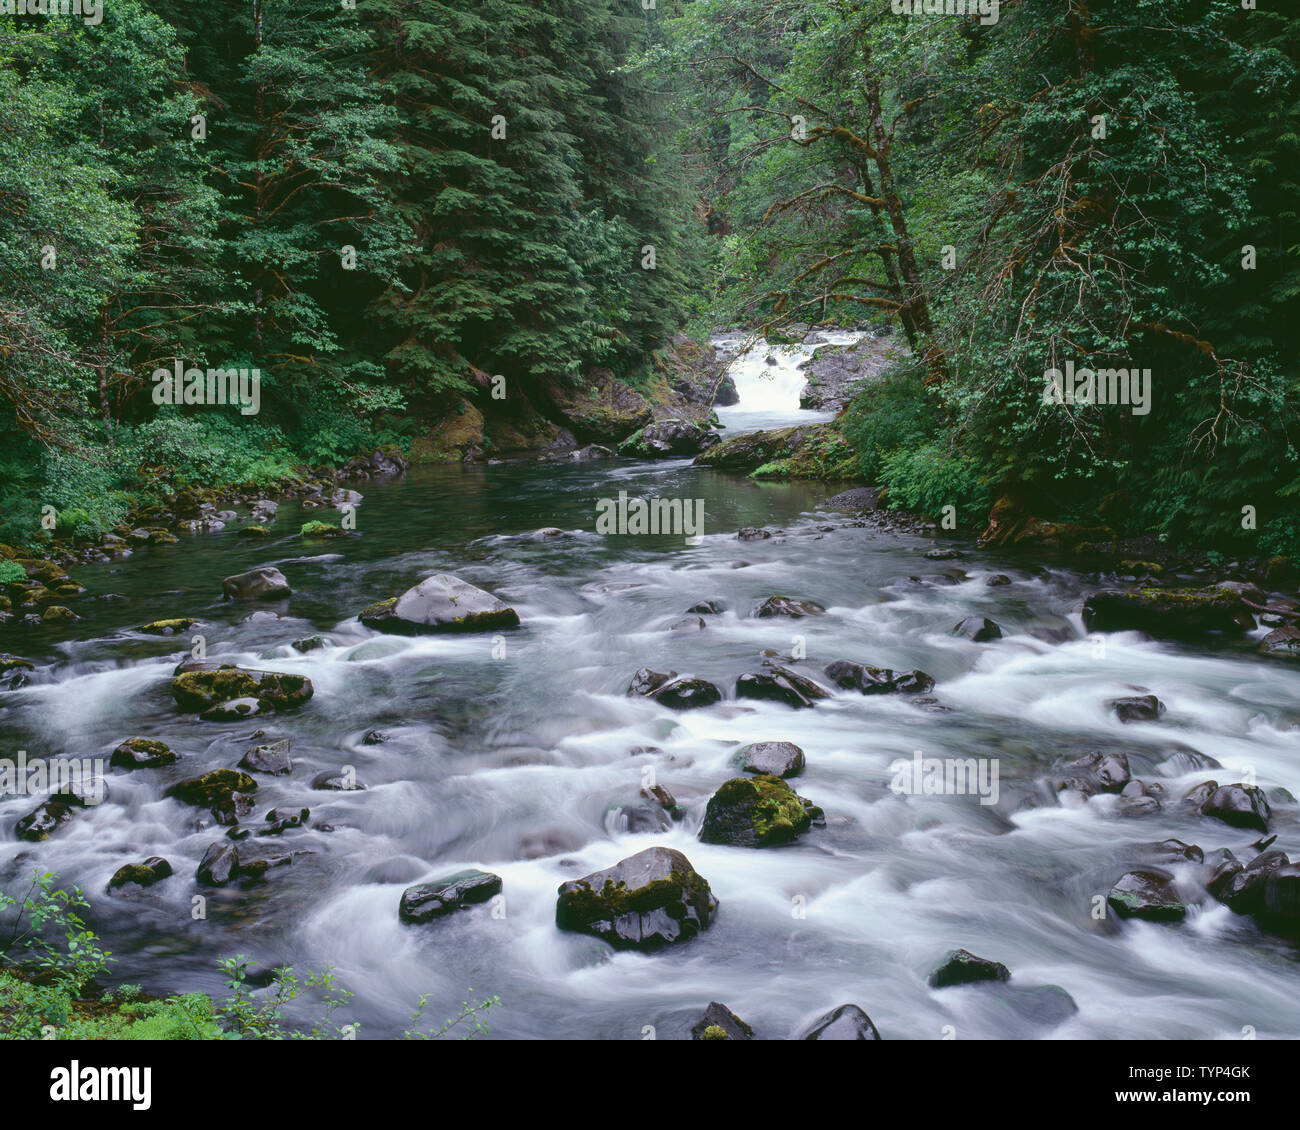 USA, Washington, Olympic National Park, Sol Duc River flows through lush rainforest valley. Stock Photo